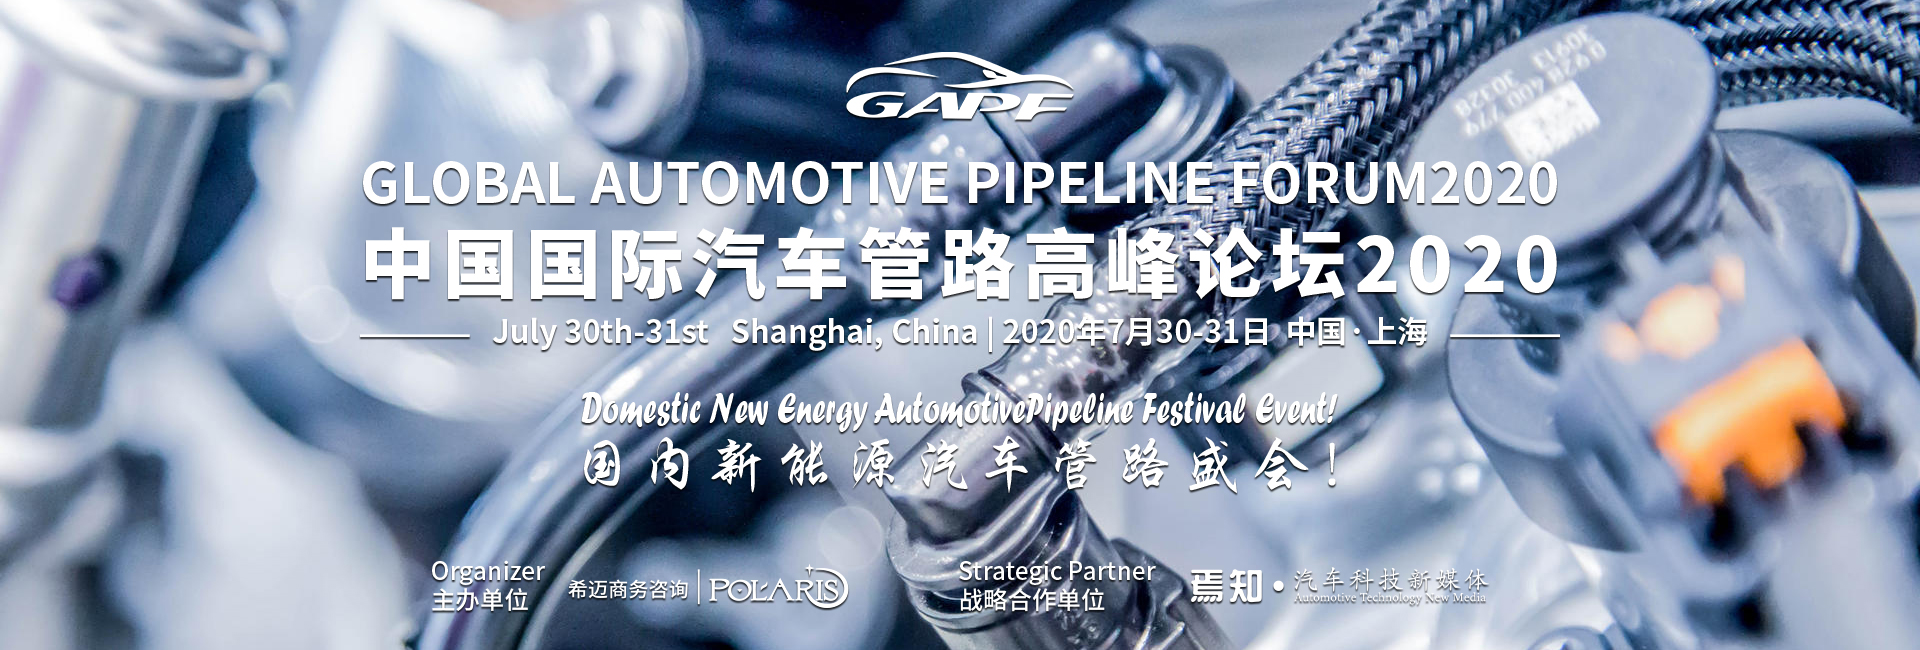 Global Automotive Pipeline Forum2020